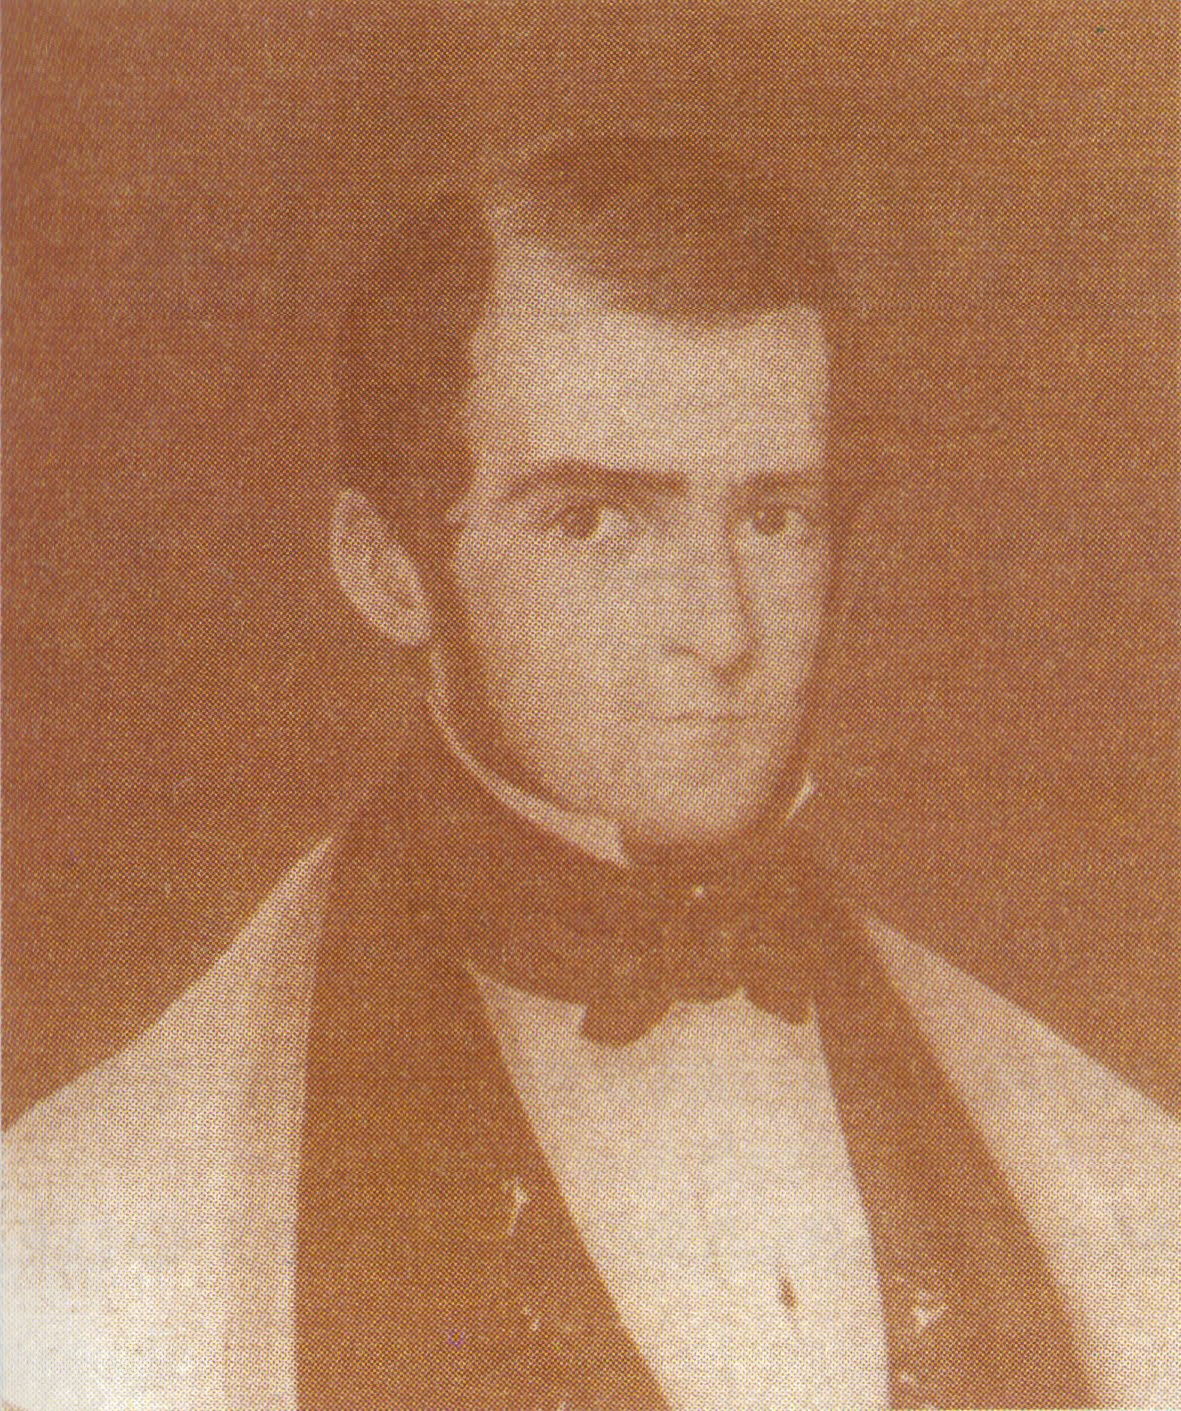 Florencio Varela